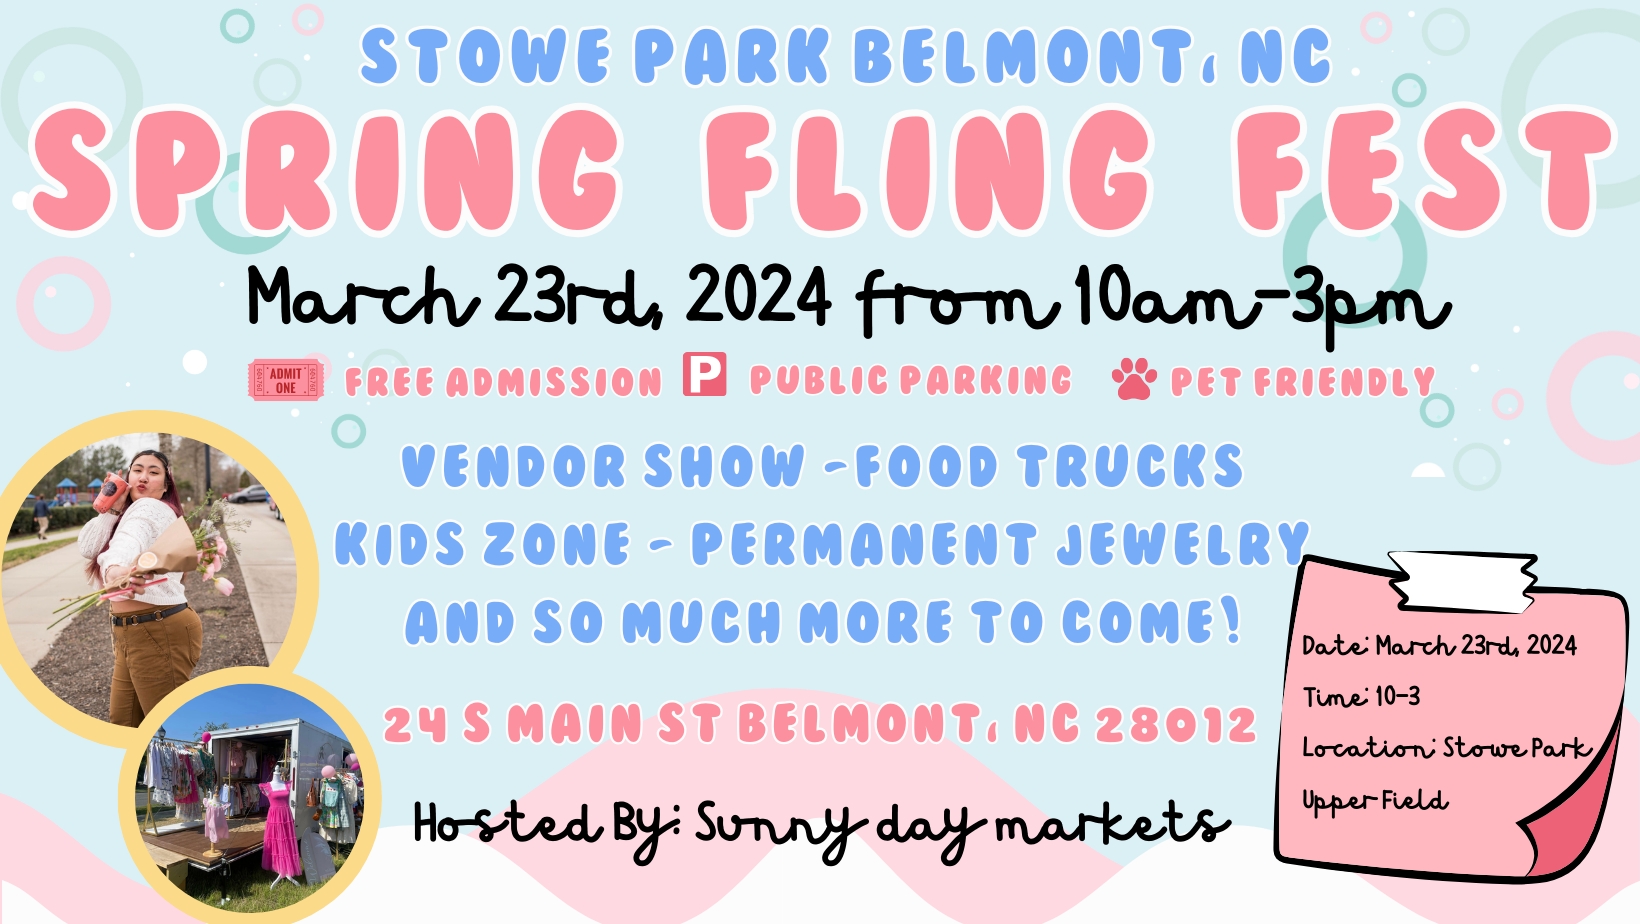 Belmont Spring Fling Fest cover image